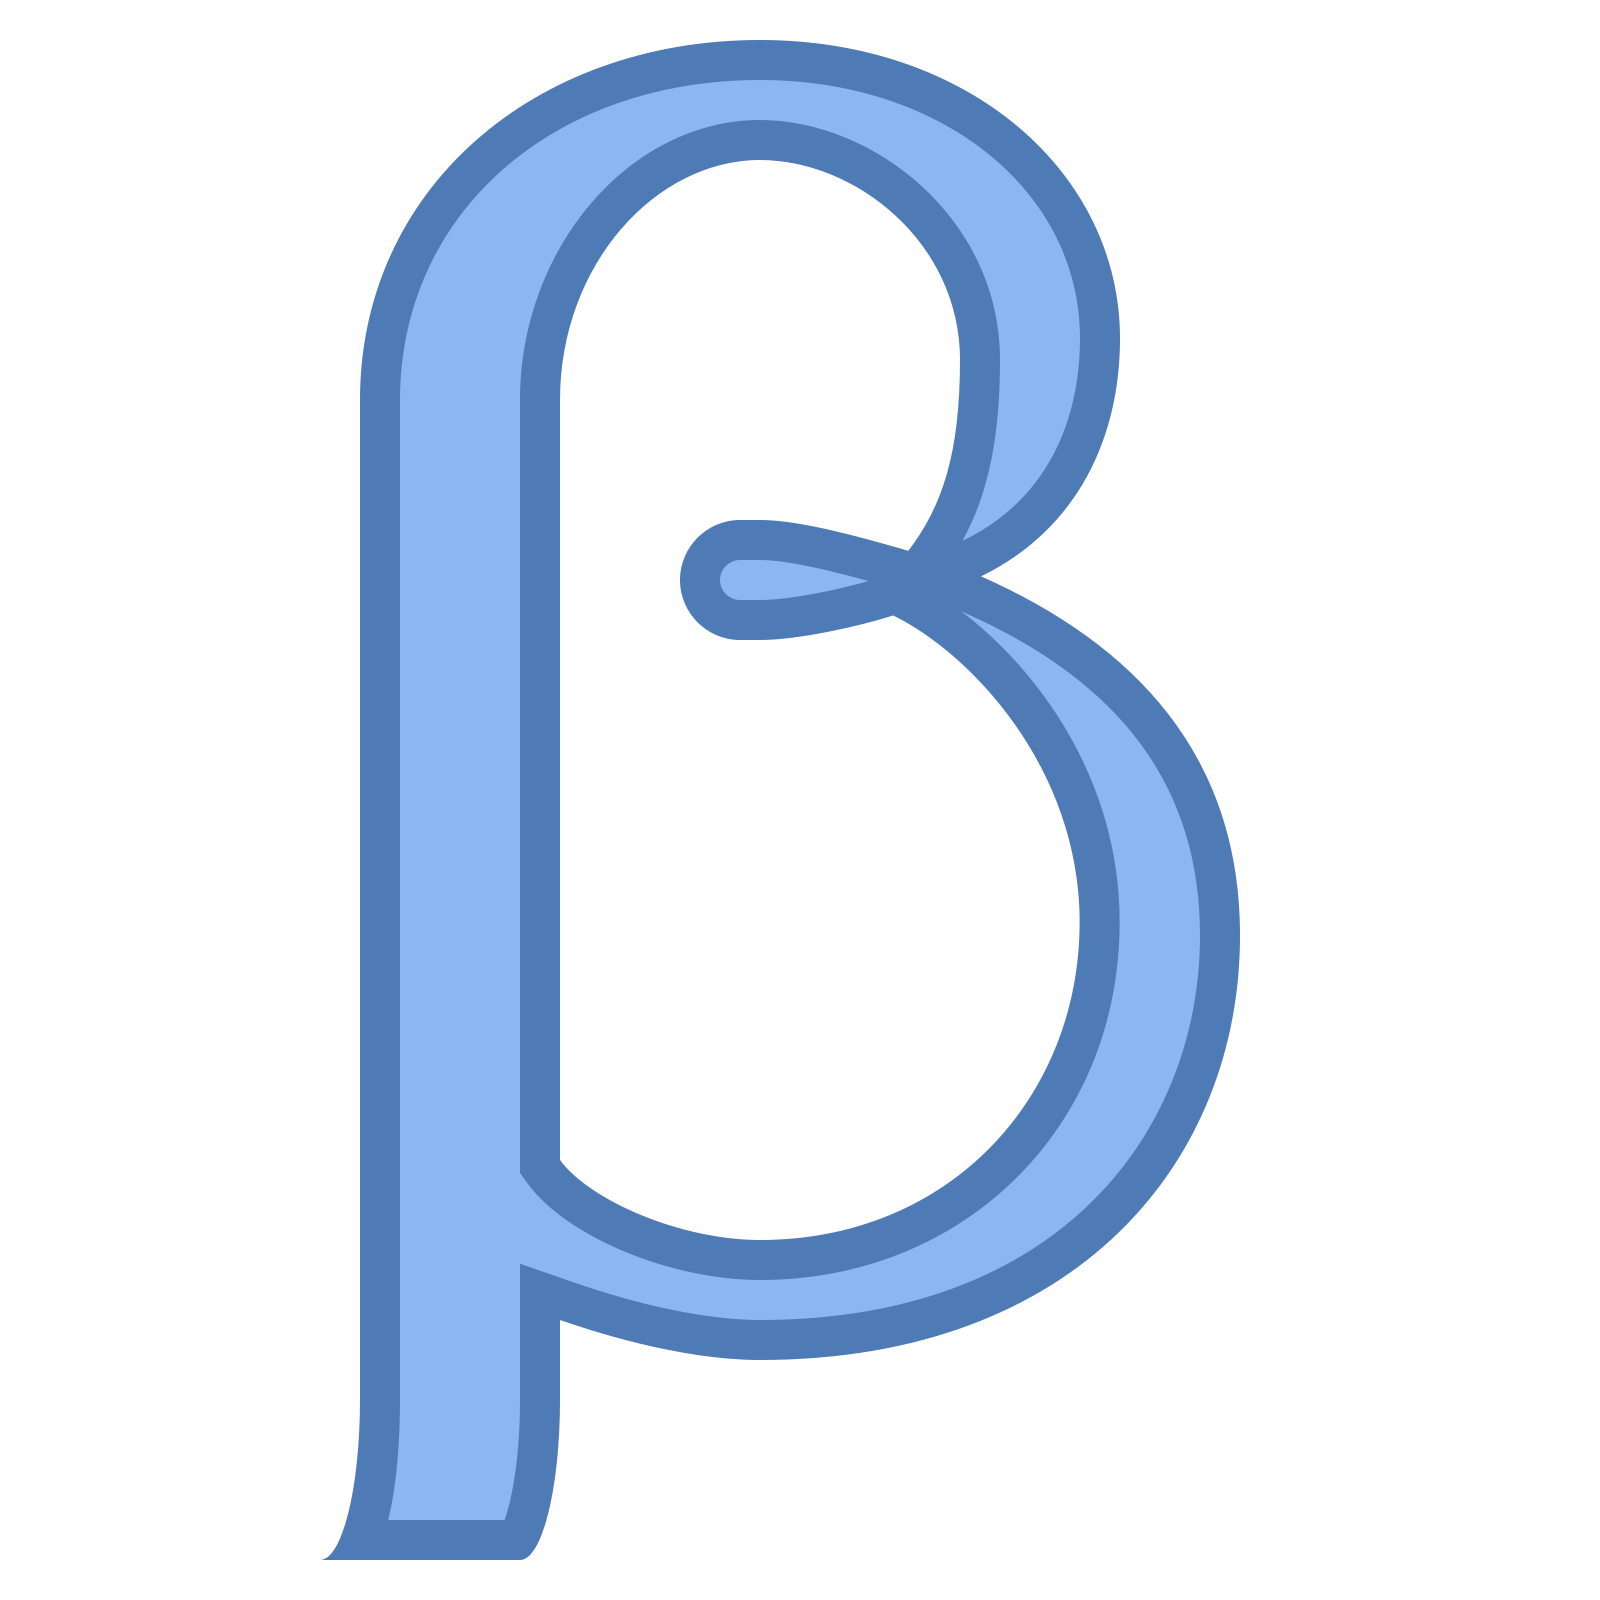 beta字母头像图片